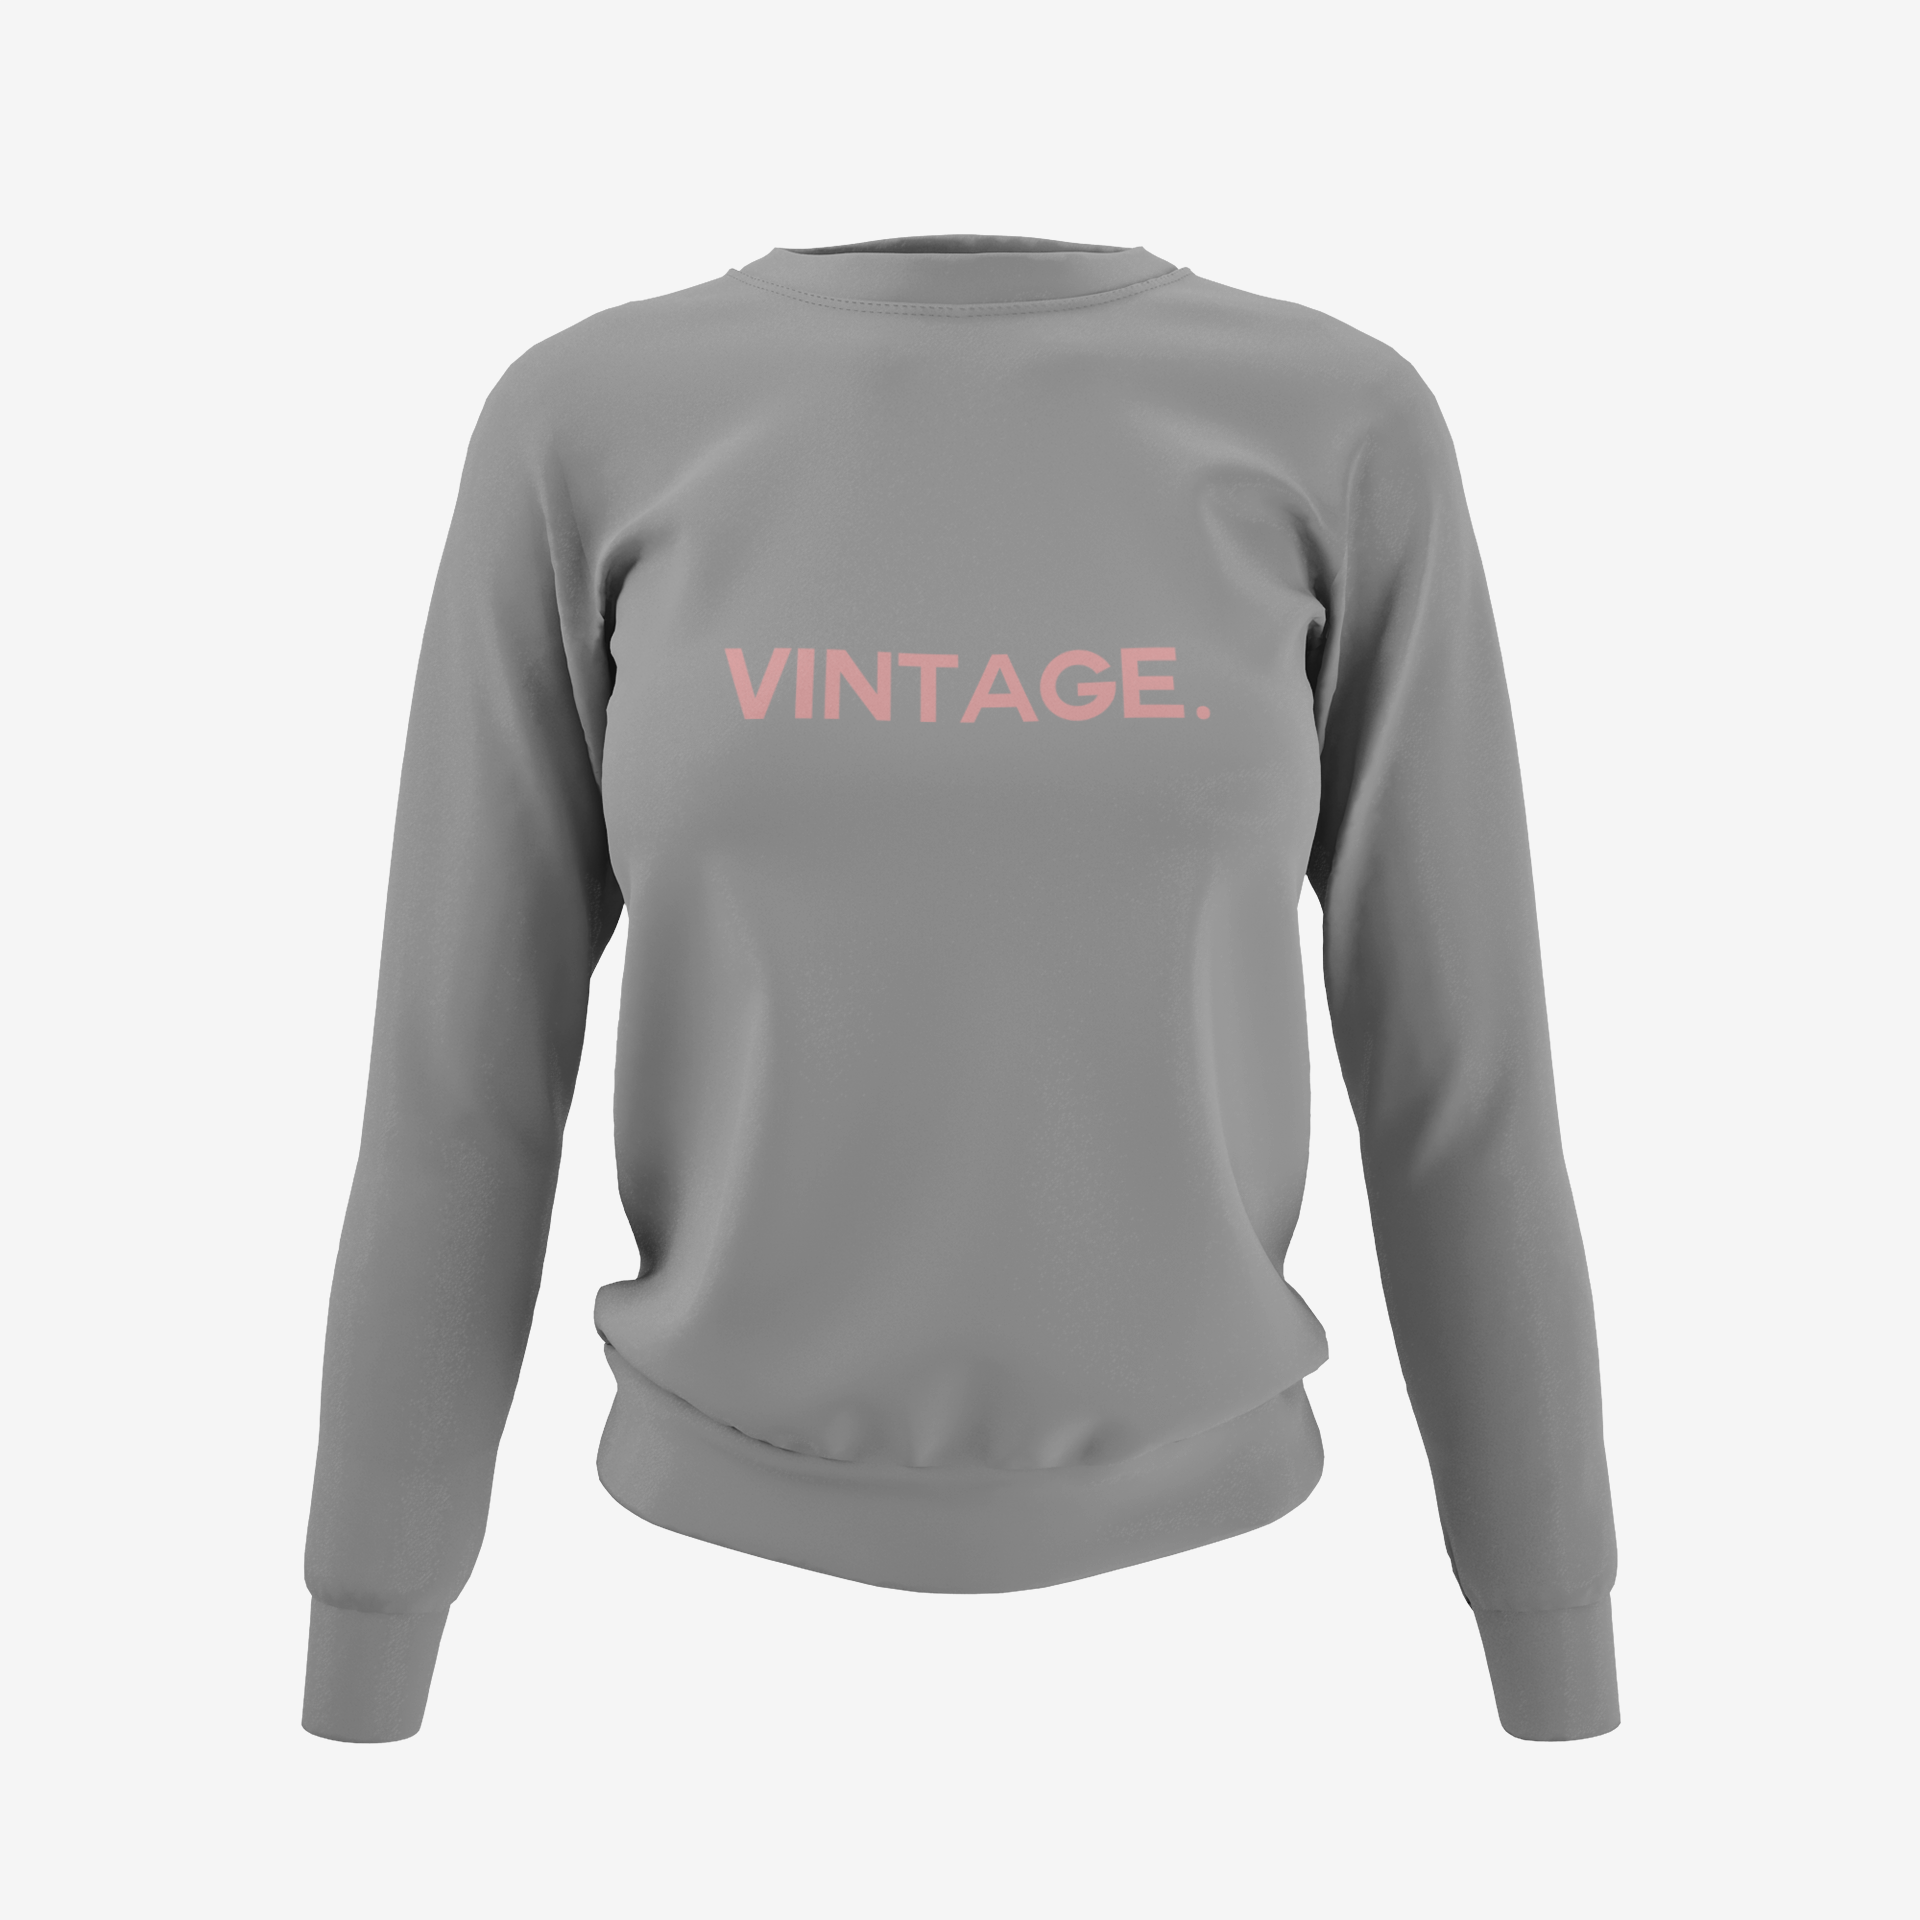 The Vintage. Sweatshirt